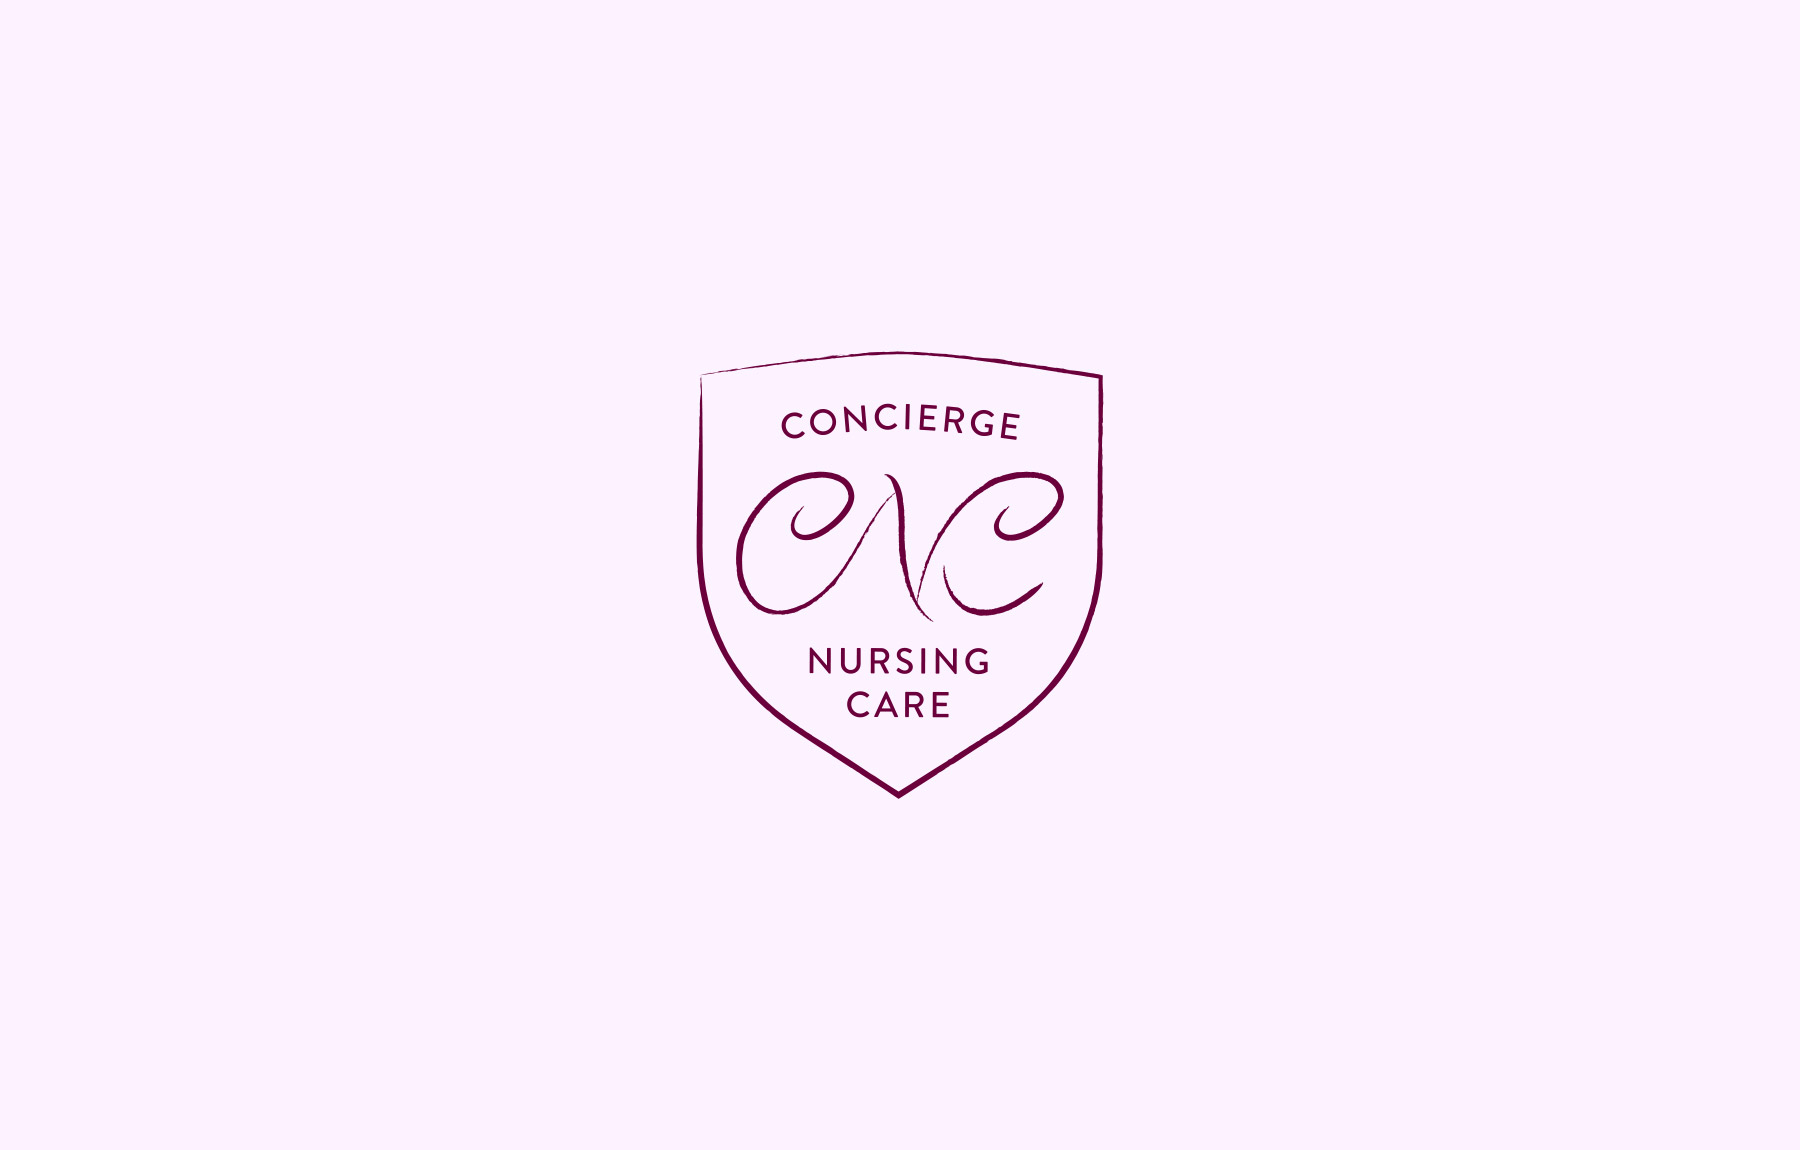 Concierge Nursing Care company logo